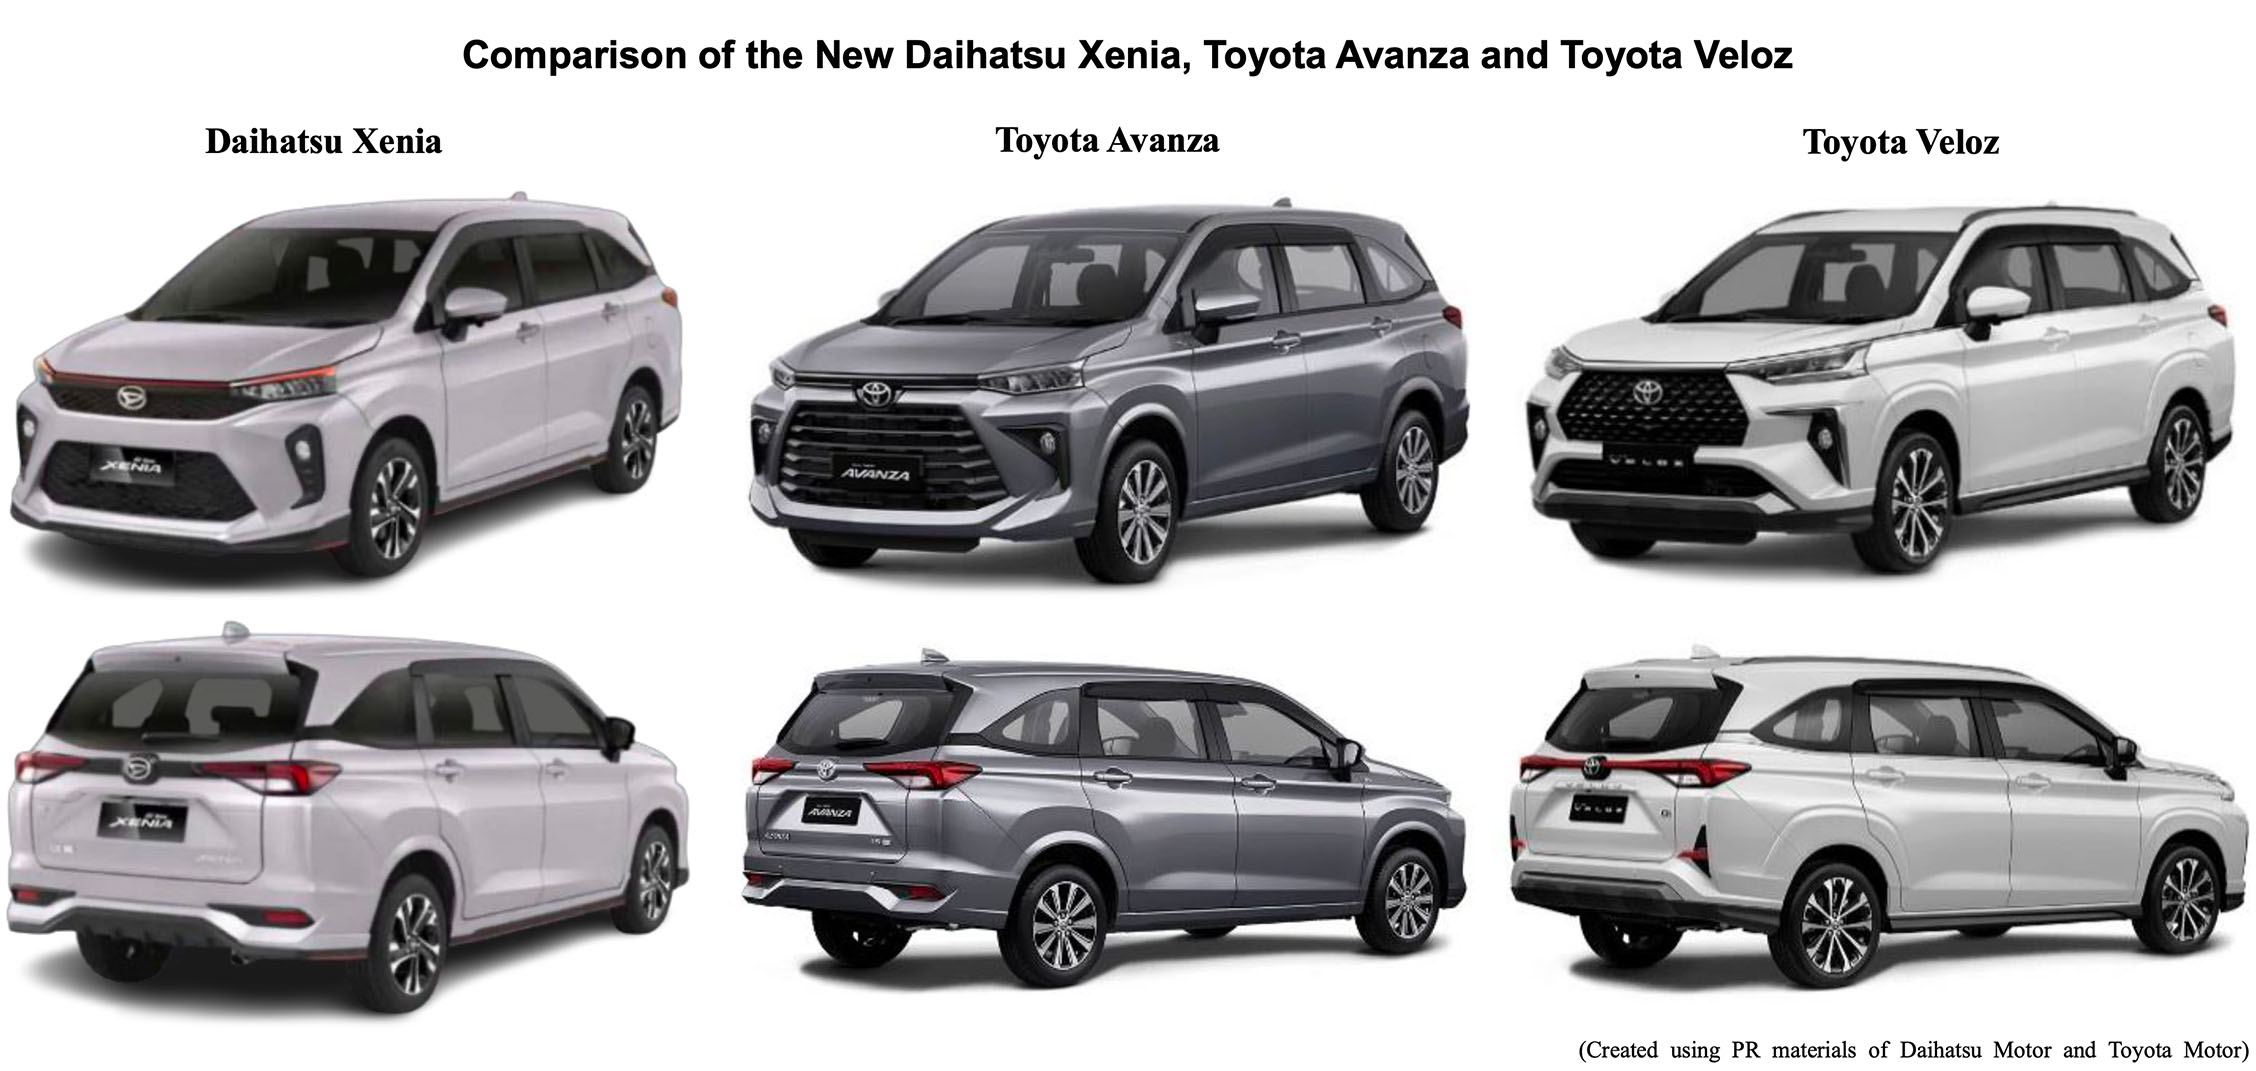 Vehicle photos: Comparison of the New Daihatsu Xenia, Toyota Avanza and Toyota Veloz